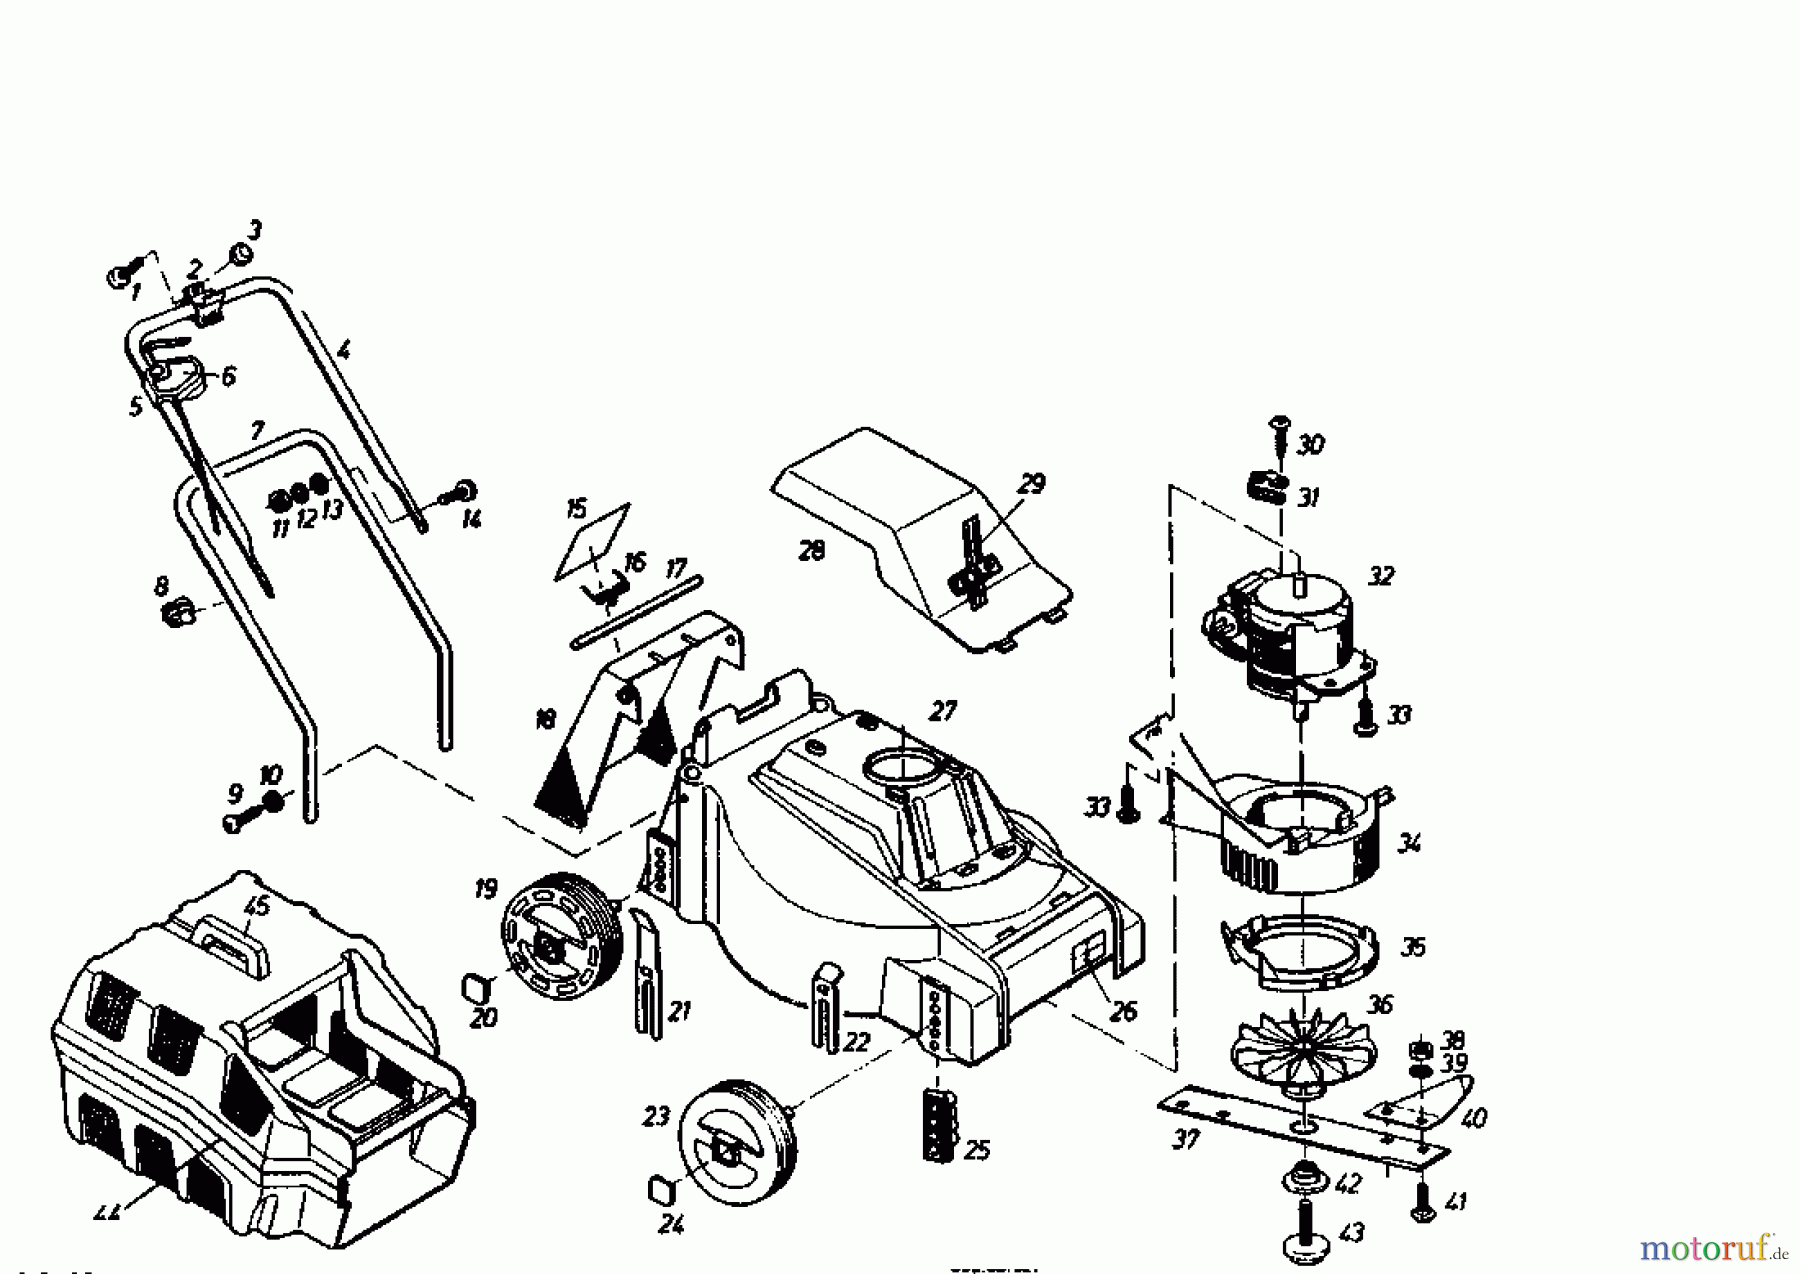  Golf Electric mower 140 HE 02889.01  (1985) Basic machine